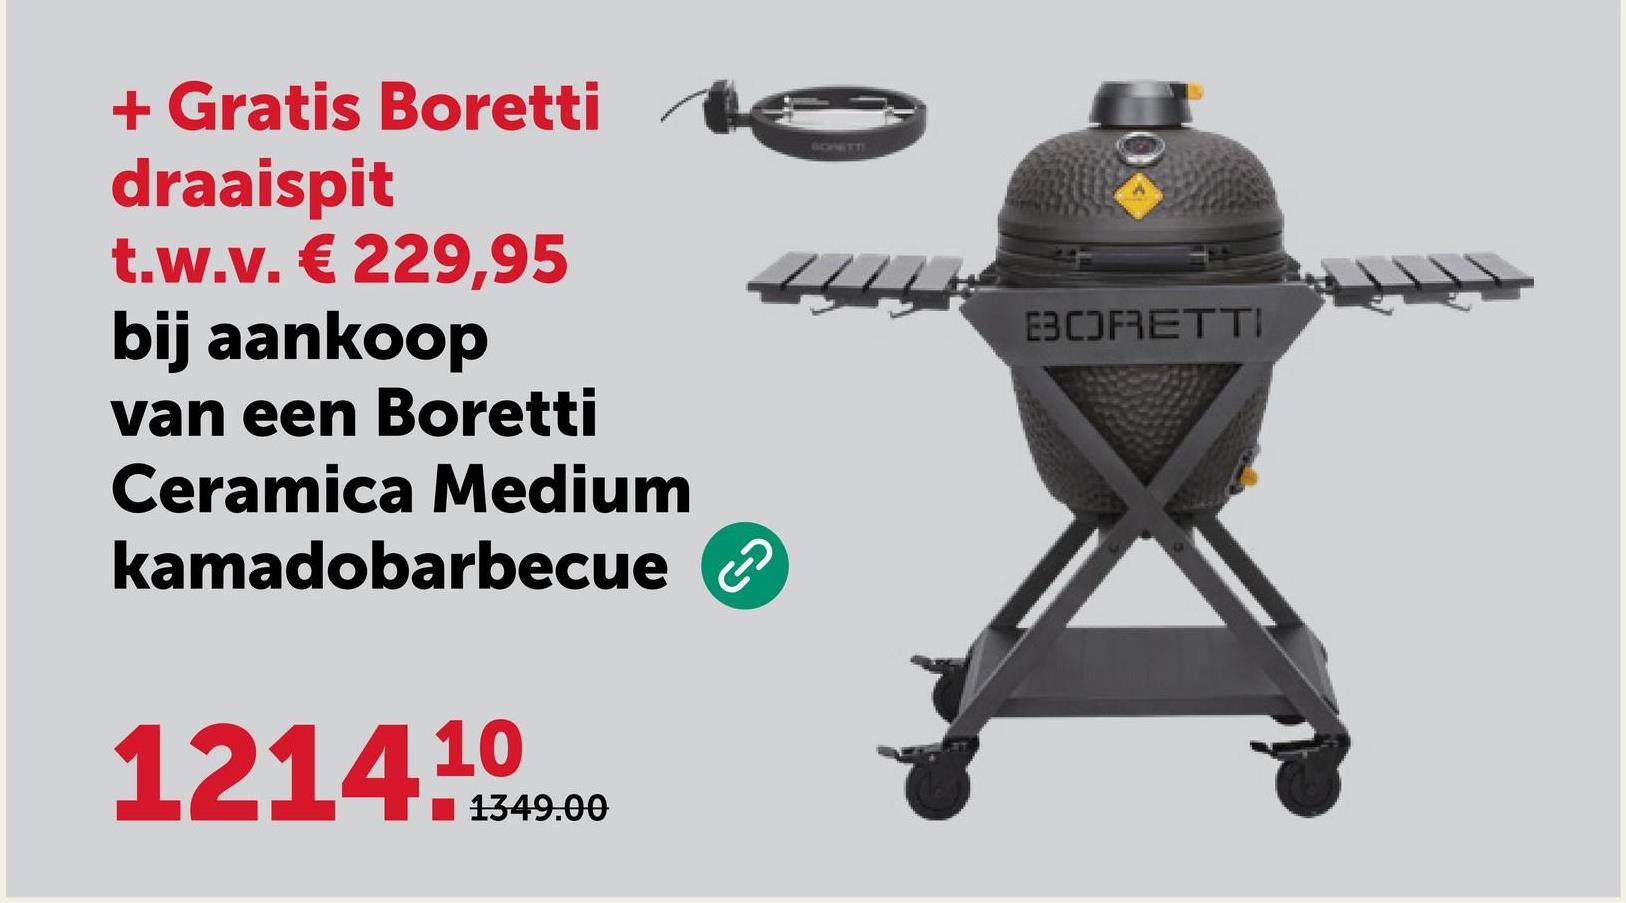 + Gratis Boretti
draaispit
t.w.v. € 229,95
bij aankoop
van een Boretti
Ceramica Medium
kamadobarbecue ②
121419
10
1349.00
SONETTI
EBCOFRETTI